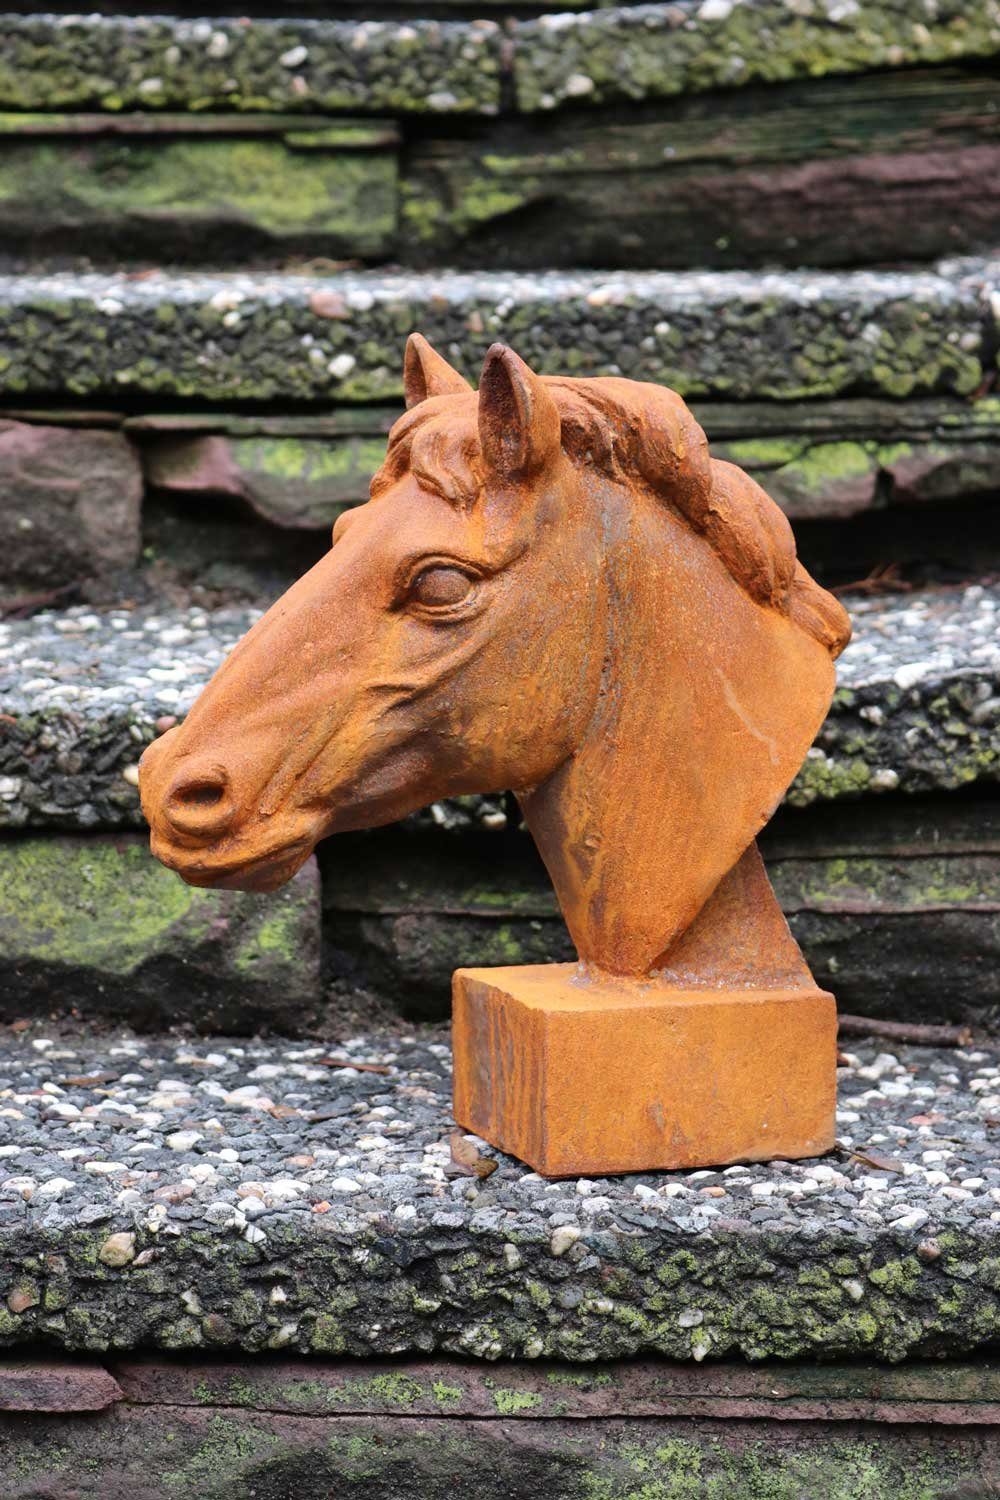 Aubaho Gartenfigur Skulptur Pferdekopf Eisen Statue horse Pferd sculpture Figur Büst iron